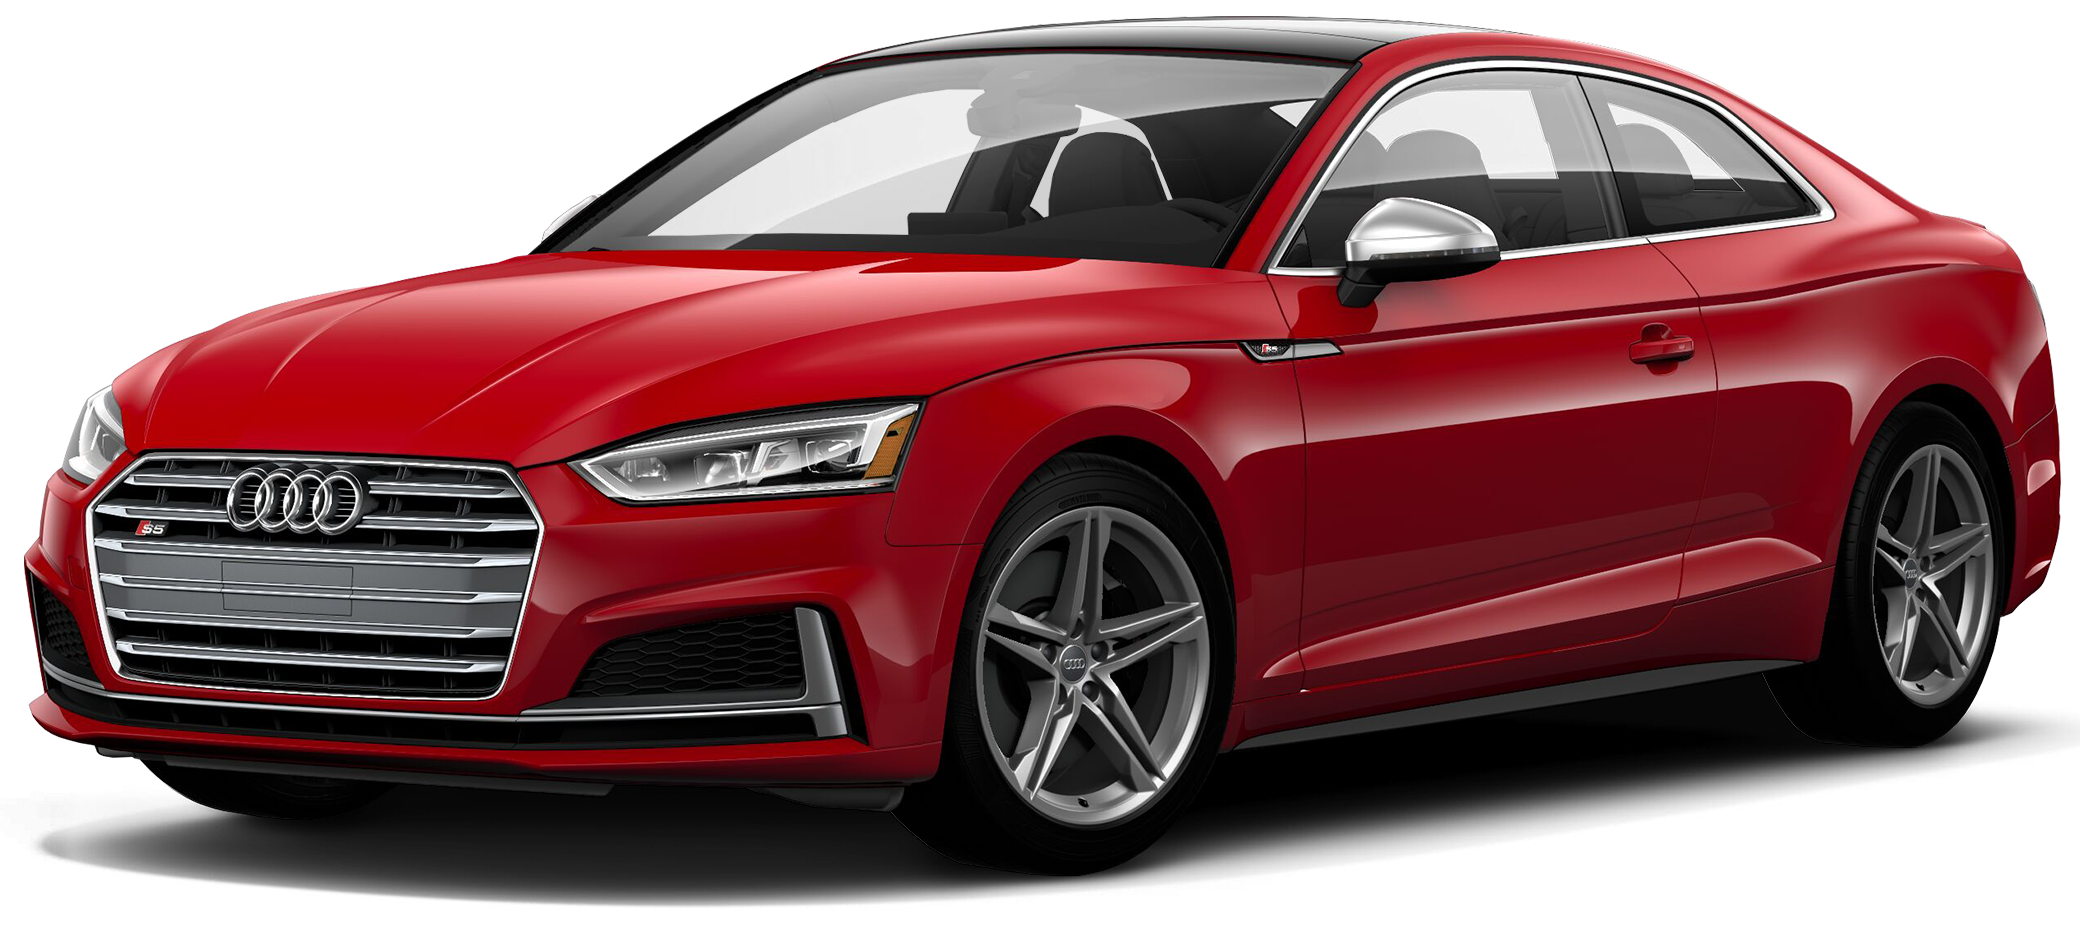 2019 Audi S5 Incentives, Specials & Offers in Palo Alto CA